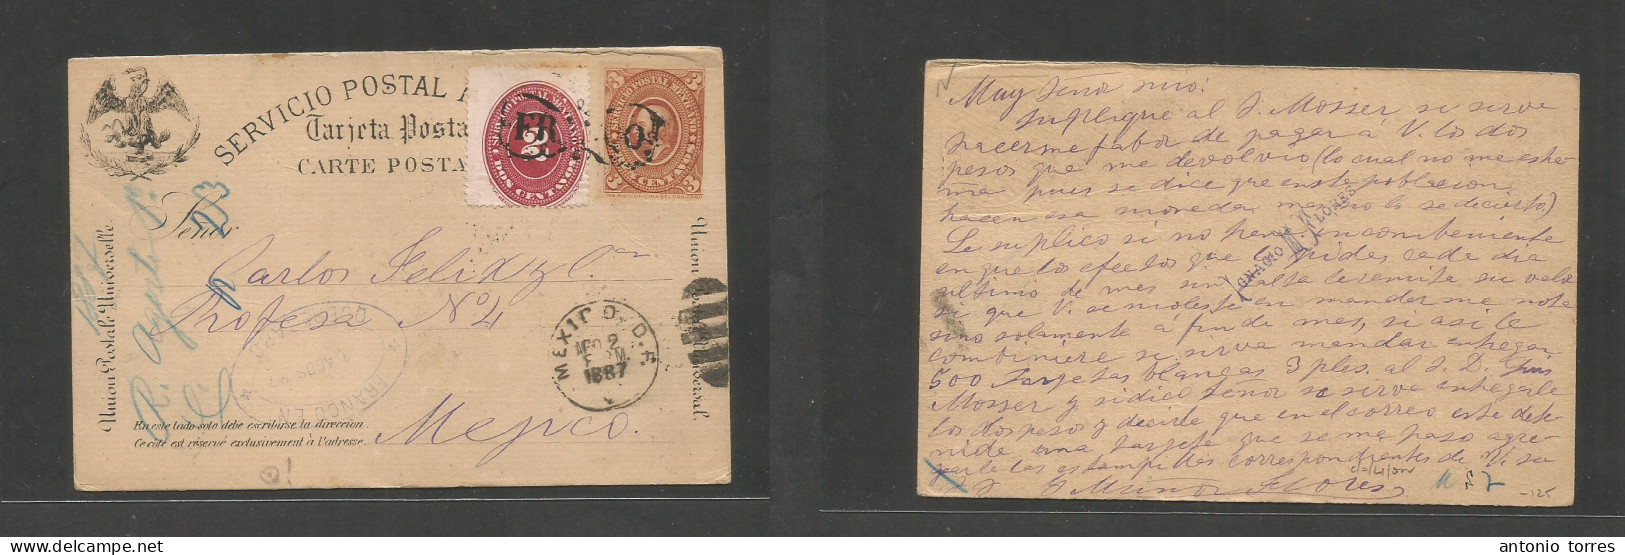 Mexico - Stationery. 1887 (1 Aug) Queretaro - DF (2 Aug) 3c Brown Medalion Stat Card + 2c Red Numeral Adtl, Tied Smashin - México